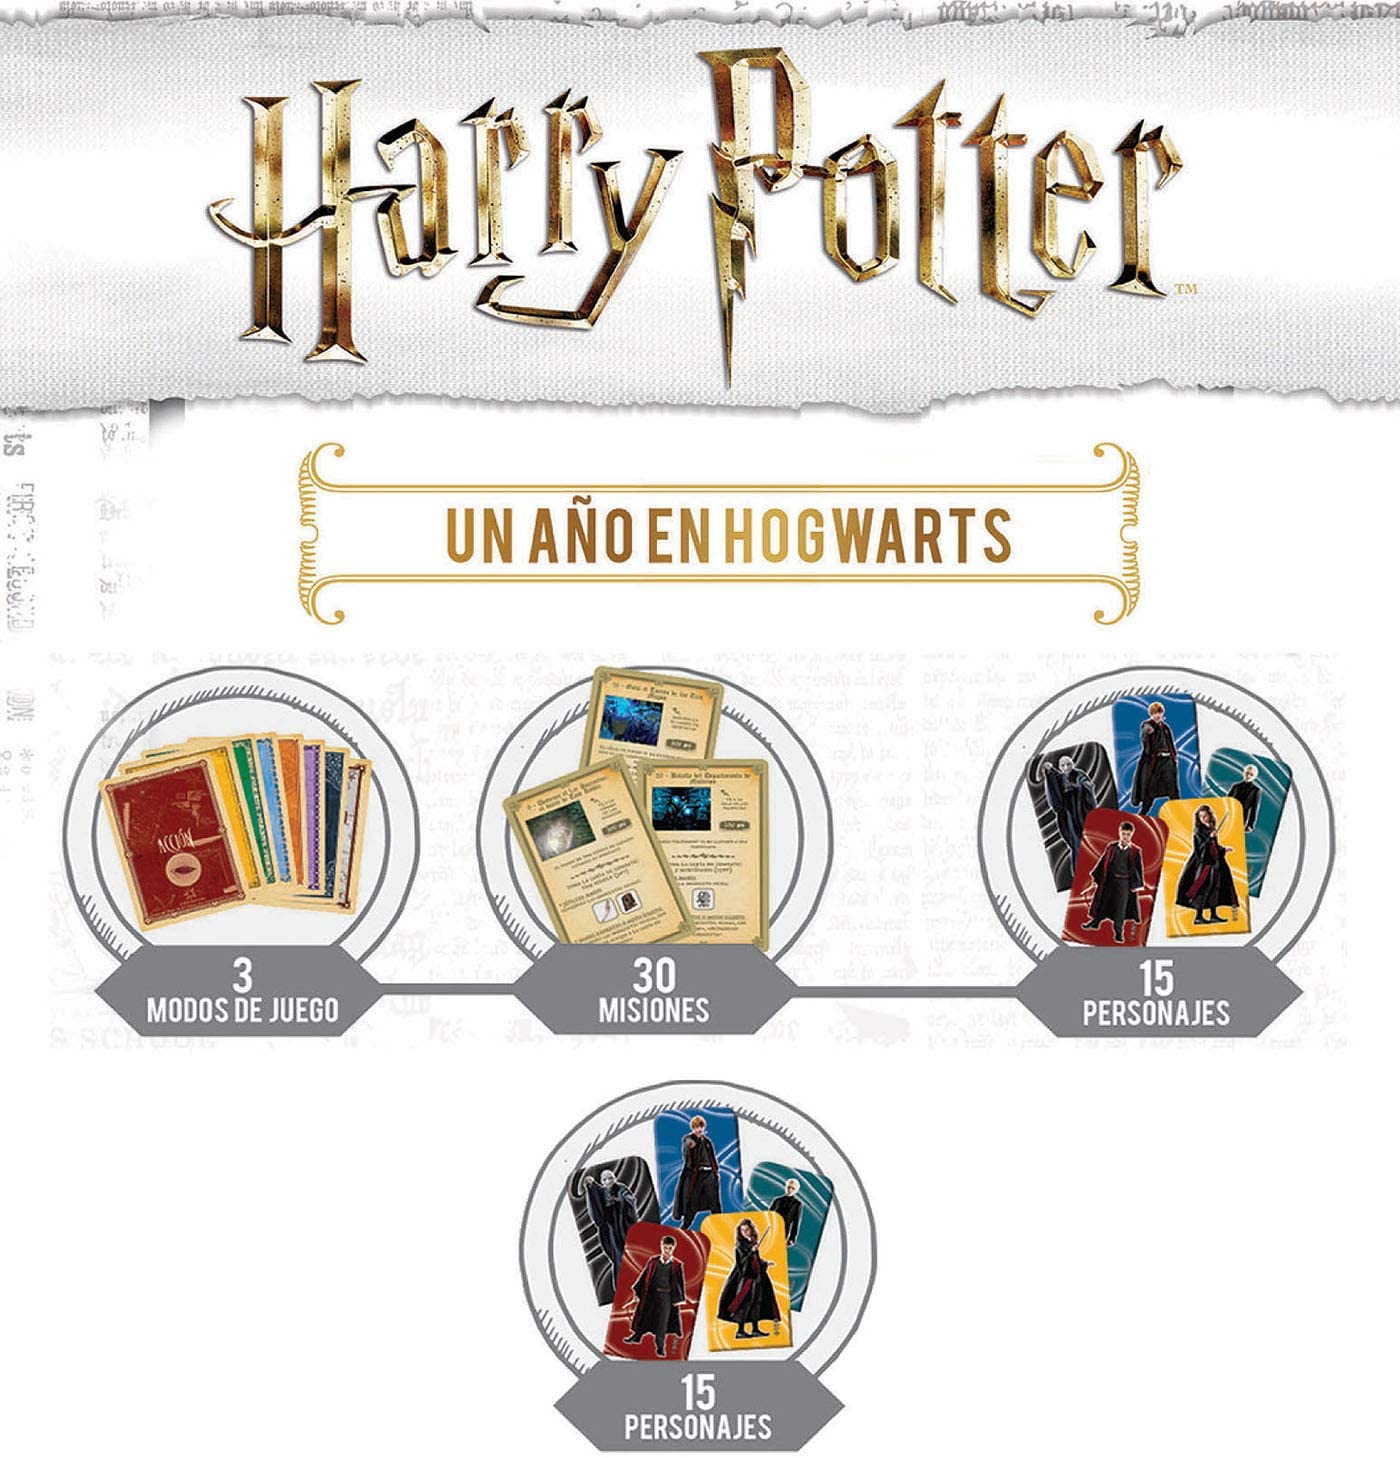 Harry potter: un anno a hogwarts - Harry Potter